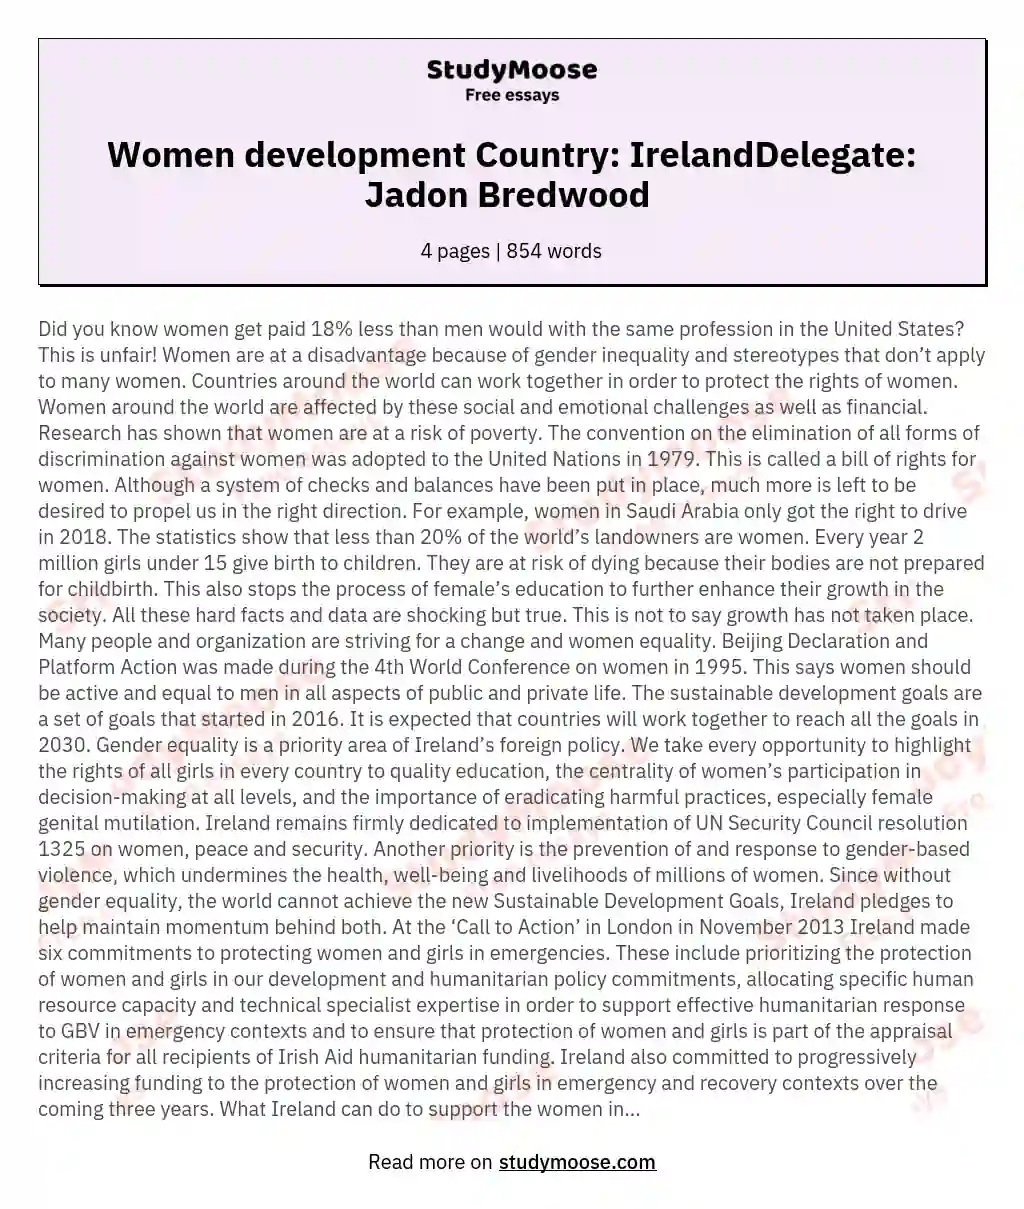 Women development Country: IrelandDelegate: Jadon Bredwood  essay